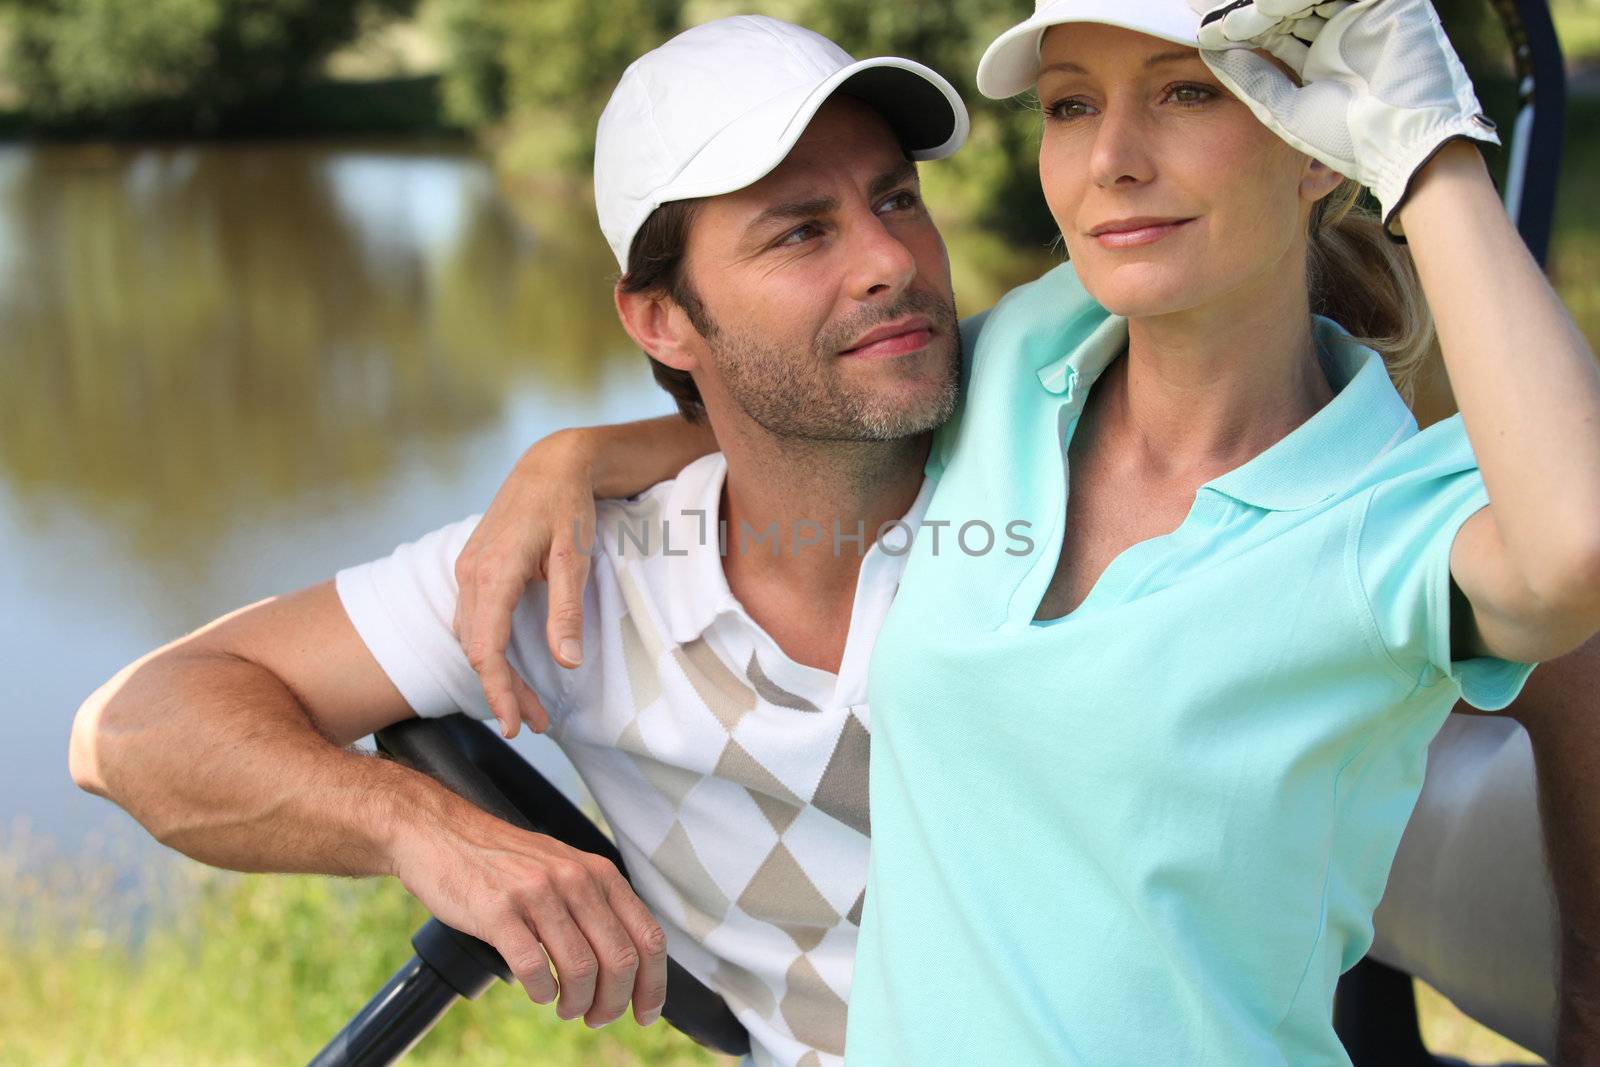 Golfer couple